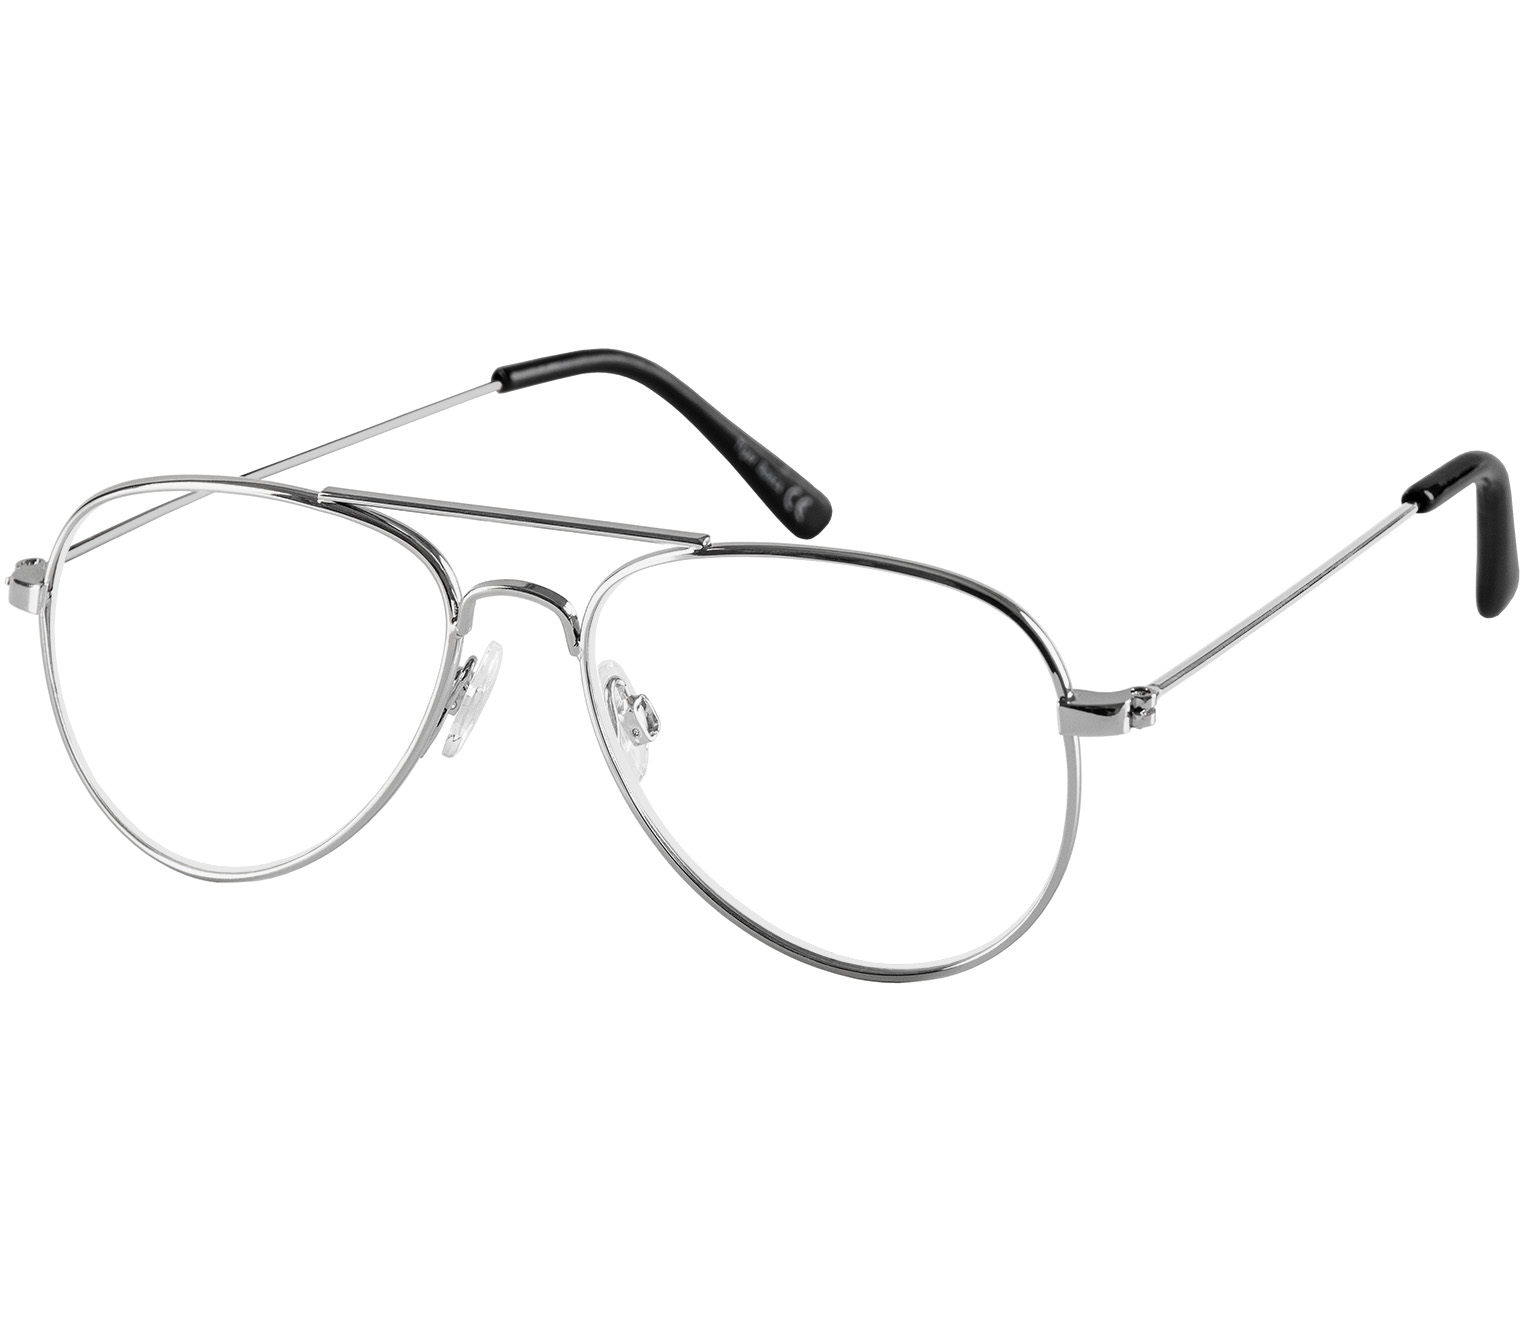 Main Image (Angle) - Mateo (Silver) Classic Reading Glasses